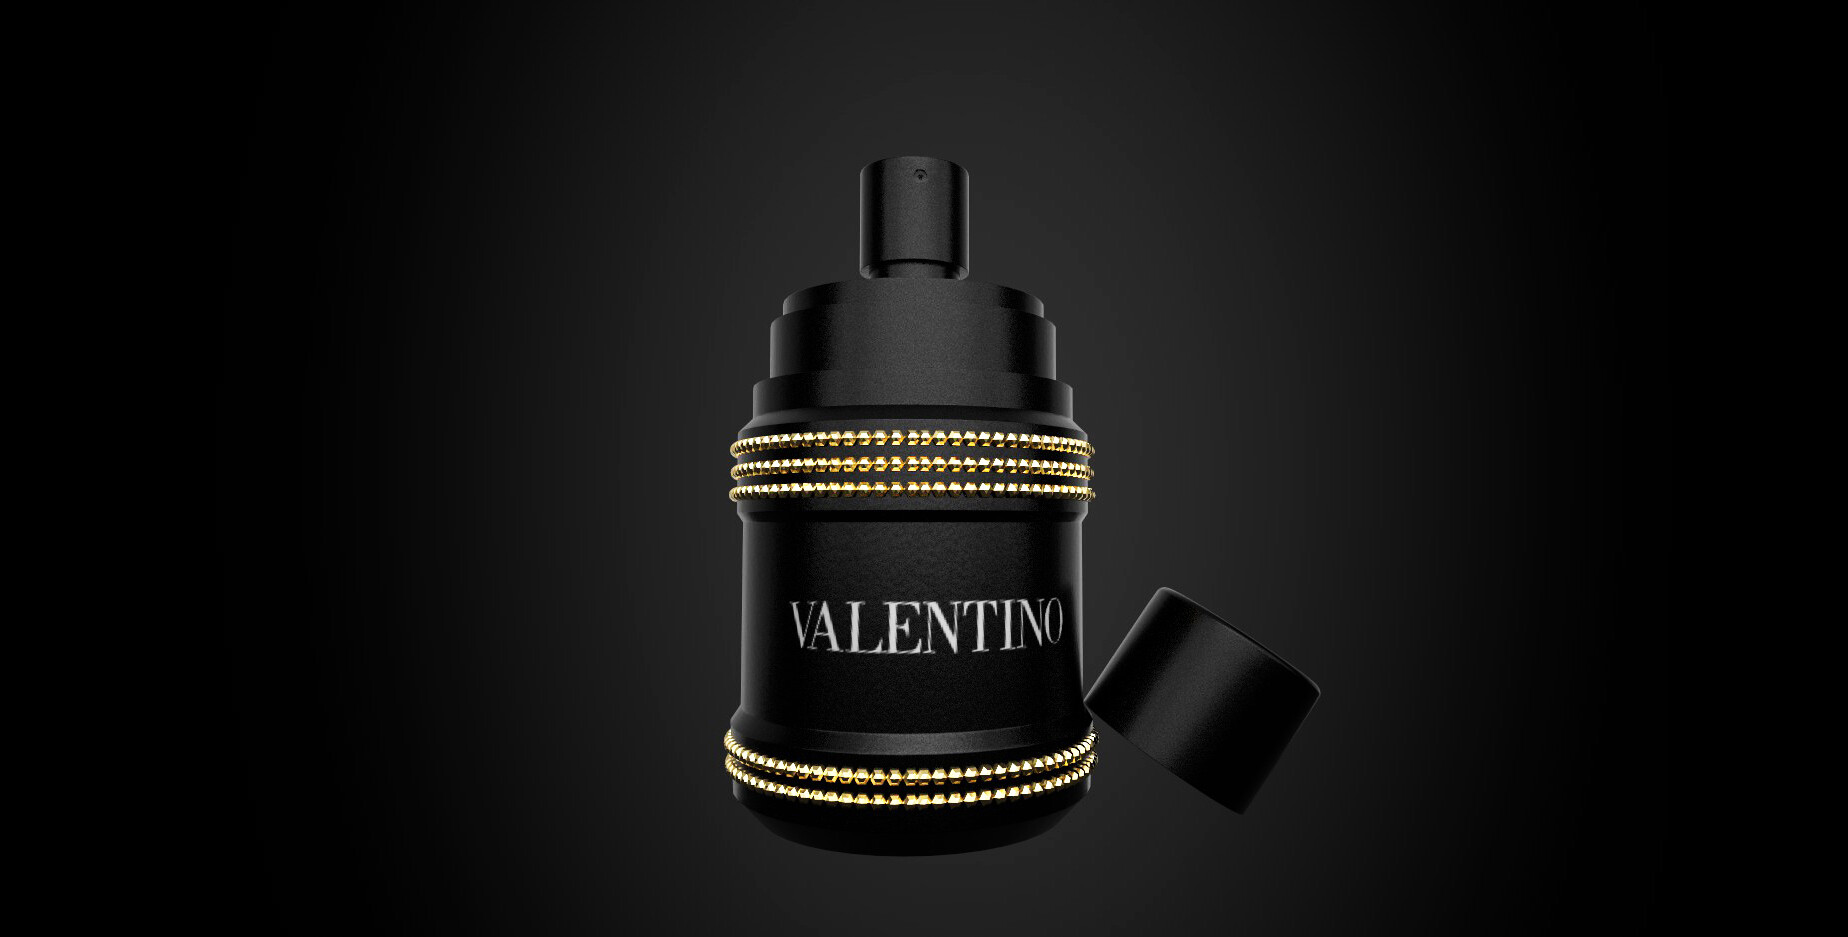 ArtStation - Valentino perfume